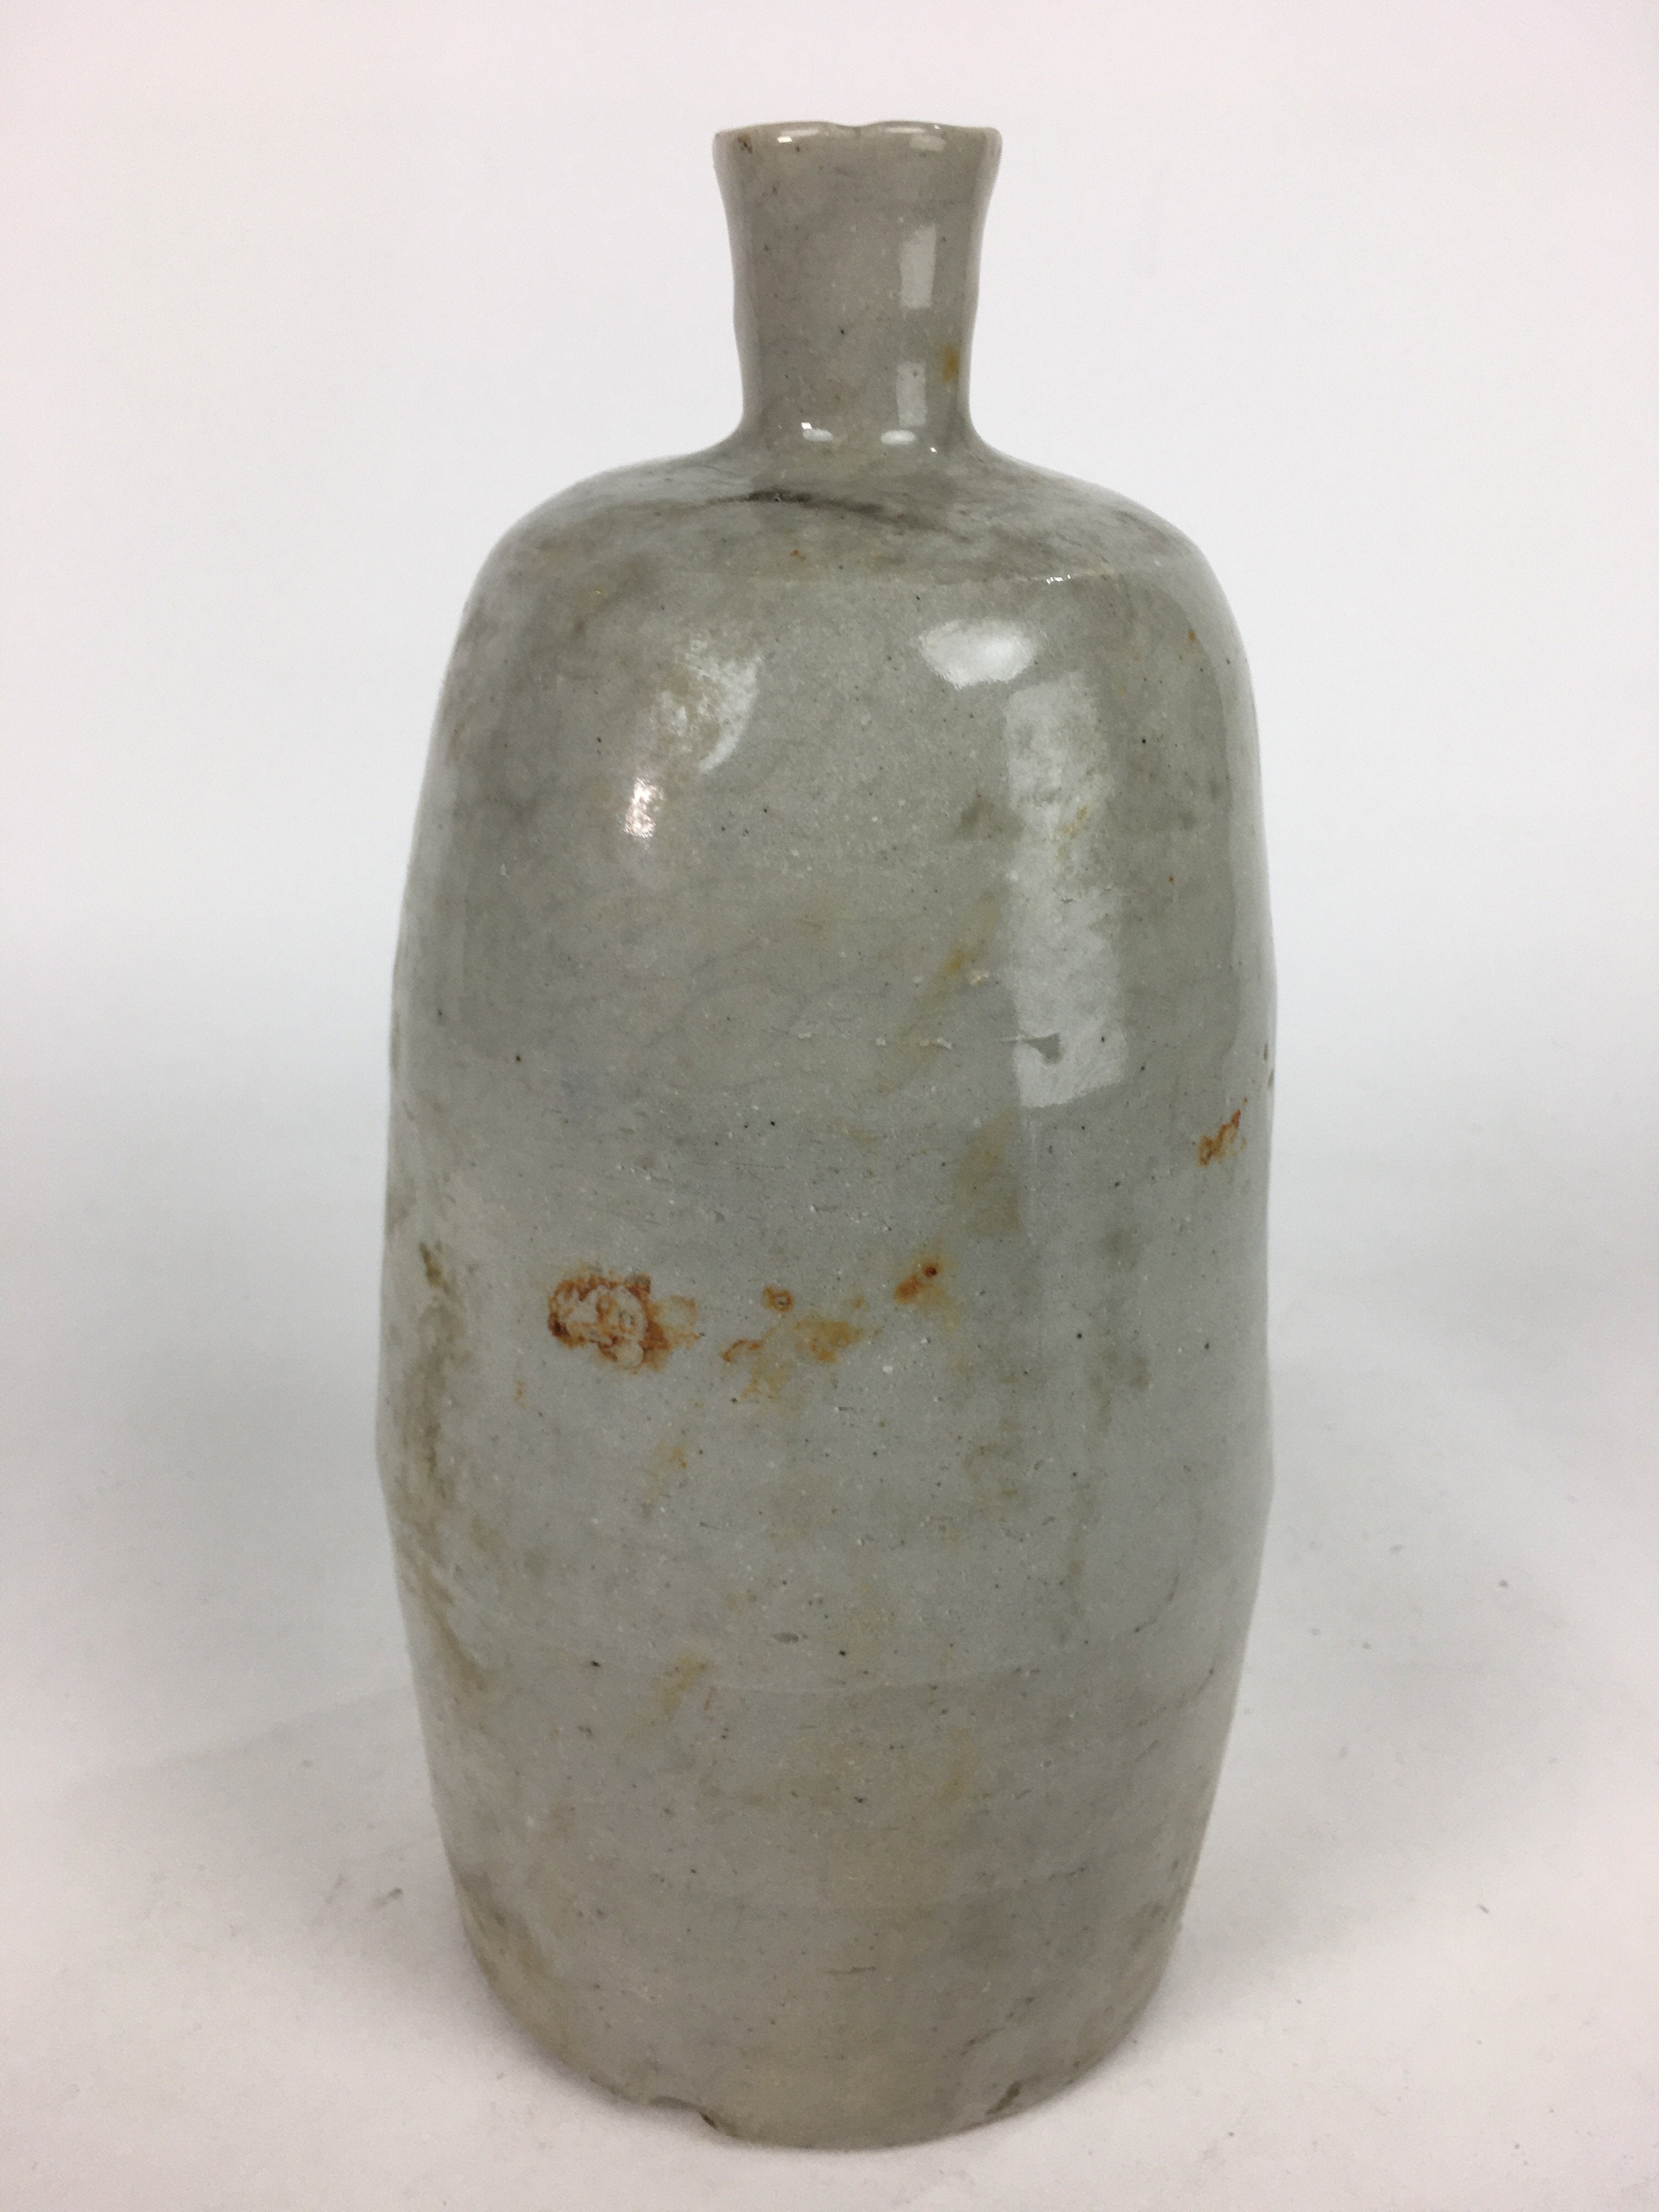 Japanese Ceramic Sake Bottle Vtg Kayoi Tokkuri Non-writing Gray Pottery TS300